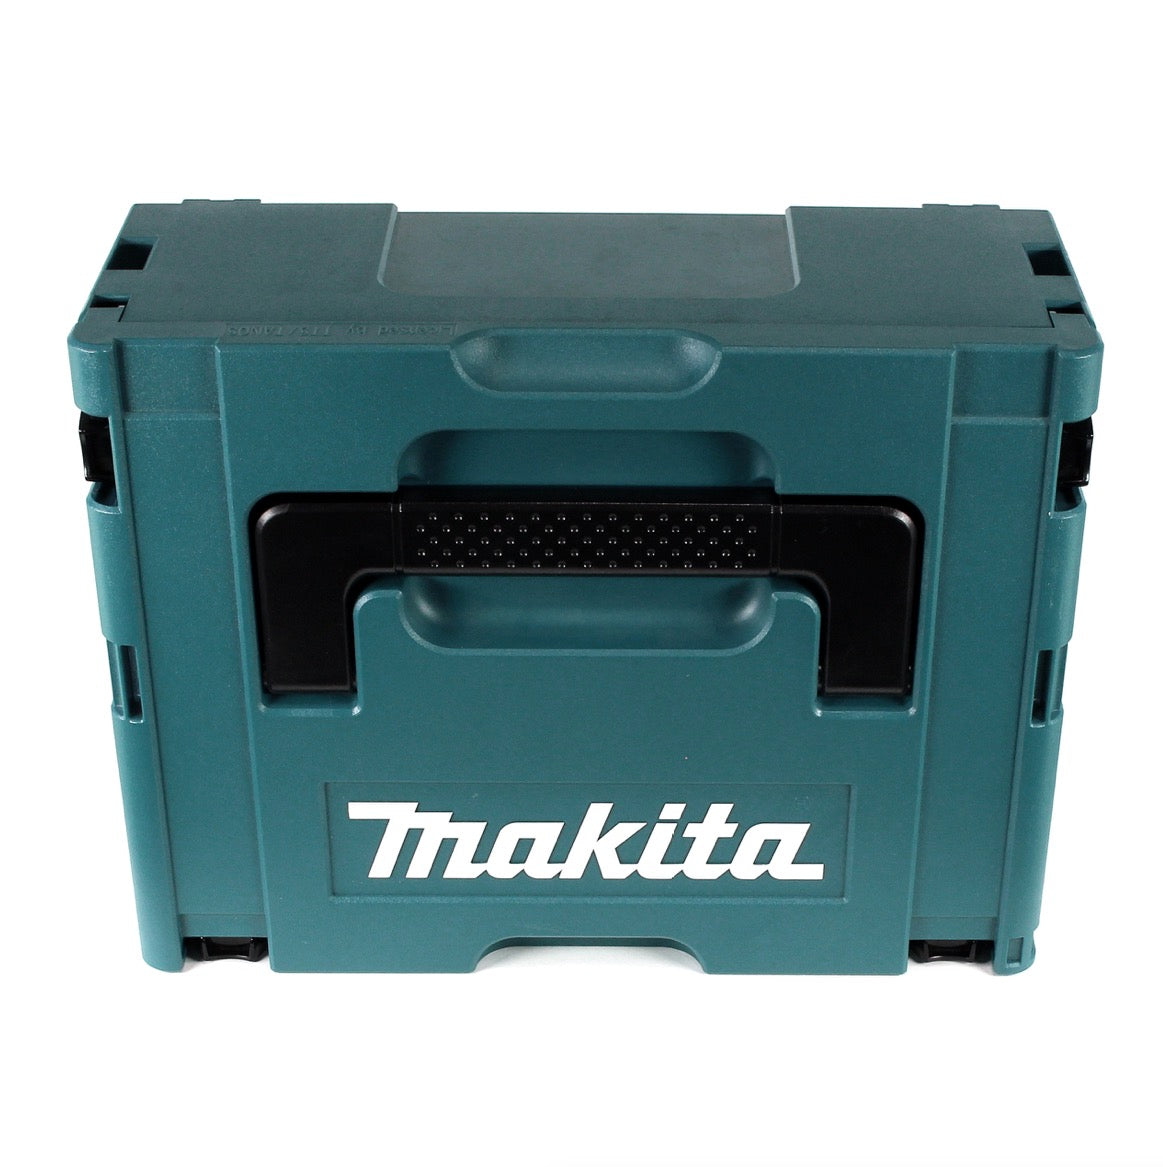 Makita DDF 485 RTJ Akku Bohrschrauber 18V 50Nm im Makpac + 2x 5,0 Ah Akku + Ladegerät - Toolbrothers